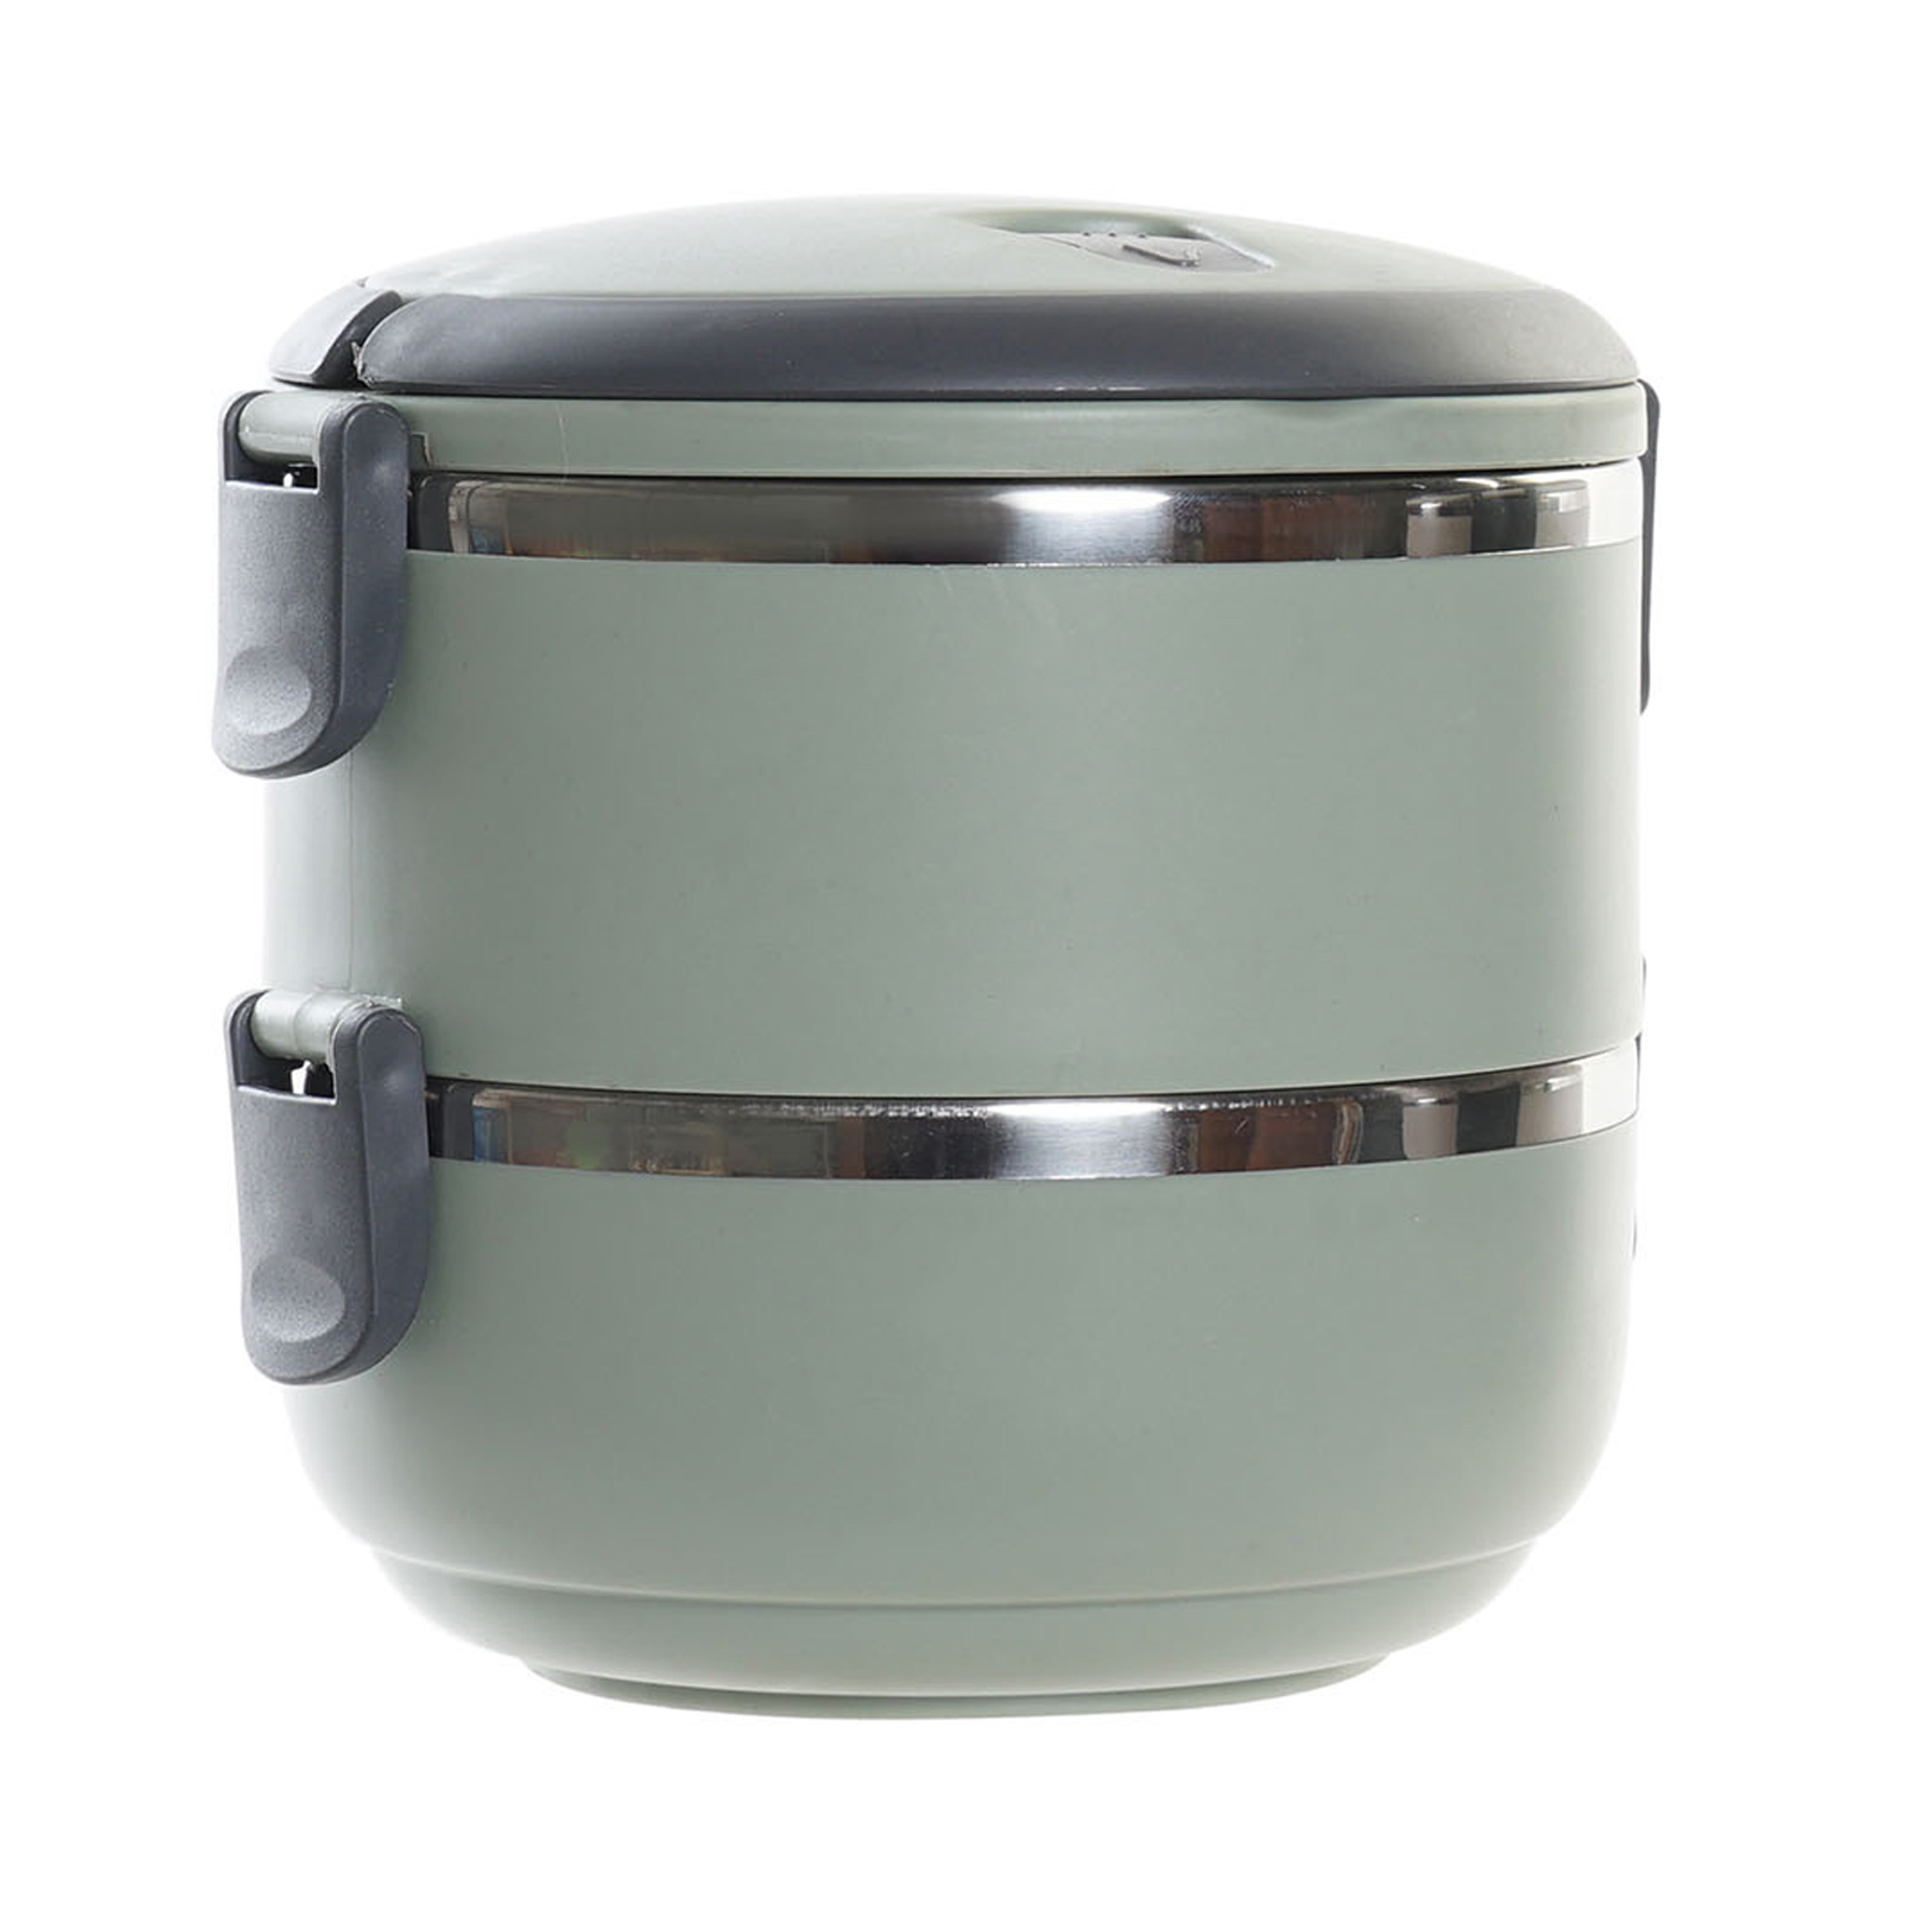 Stapelbare thermische lunchbox / warme maaltijd box - groen - 16 x 15 cm -